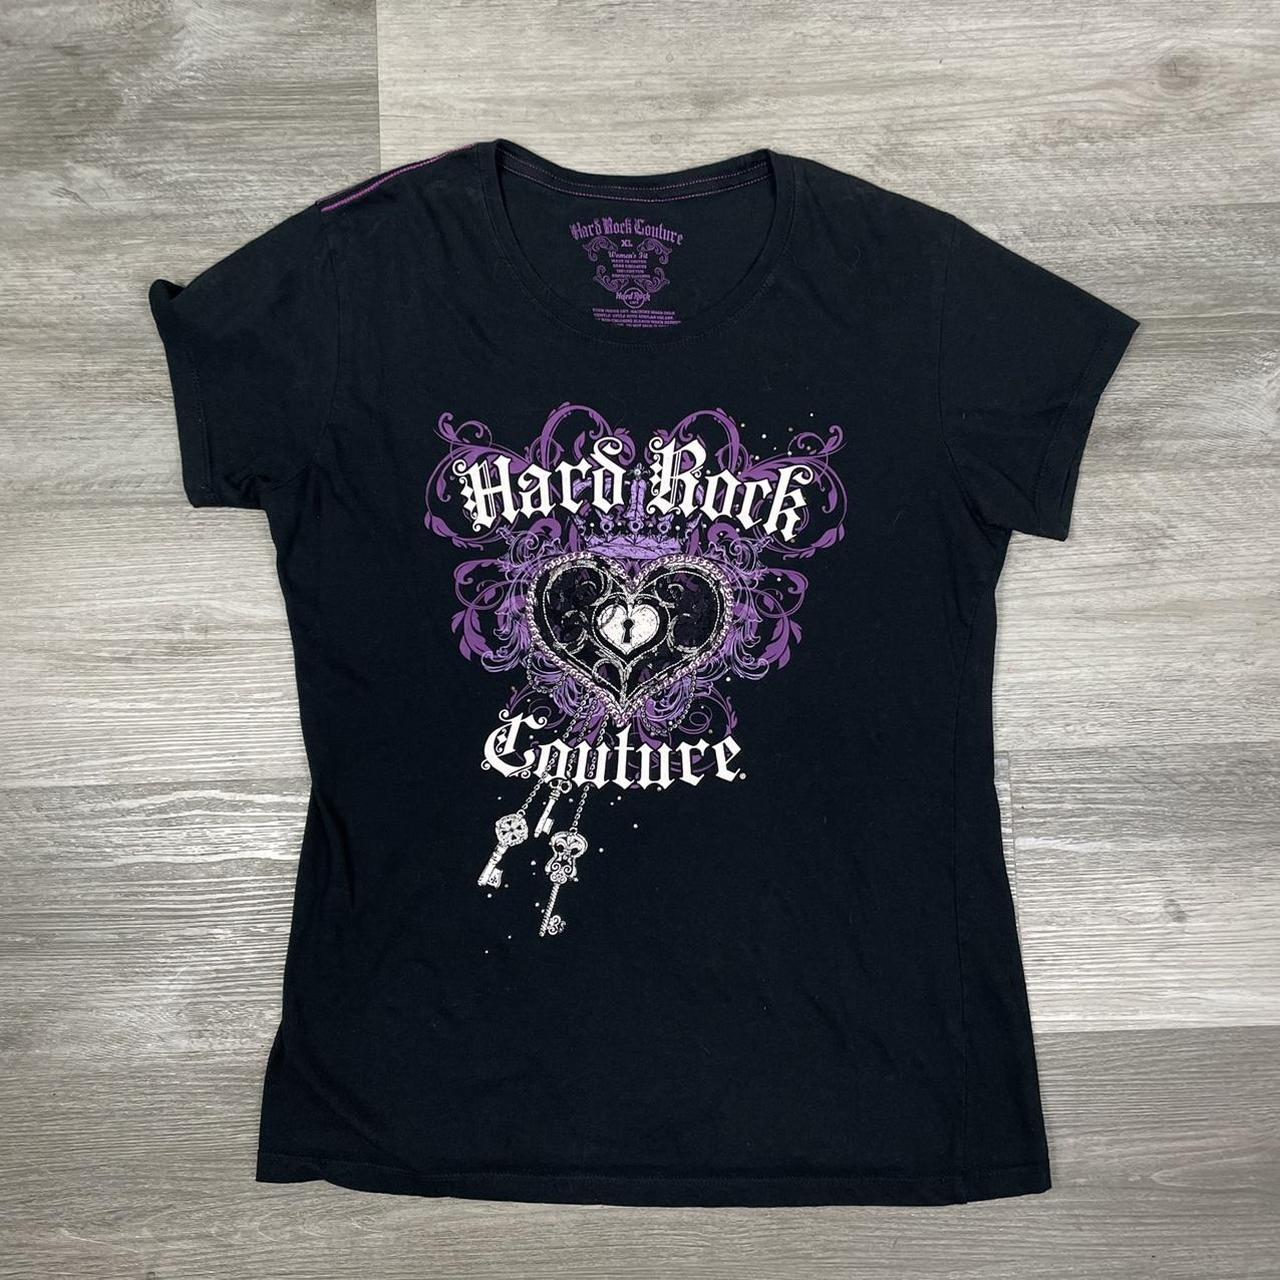 Hard Rock Cafe Women's Black and Purple T-shirt